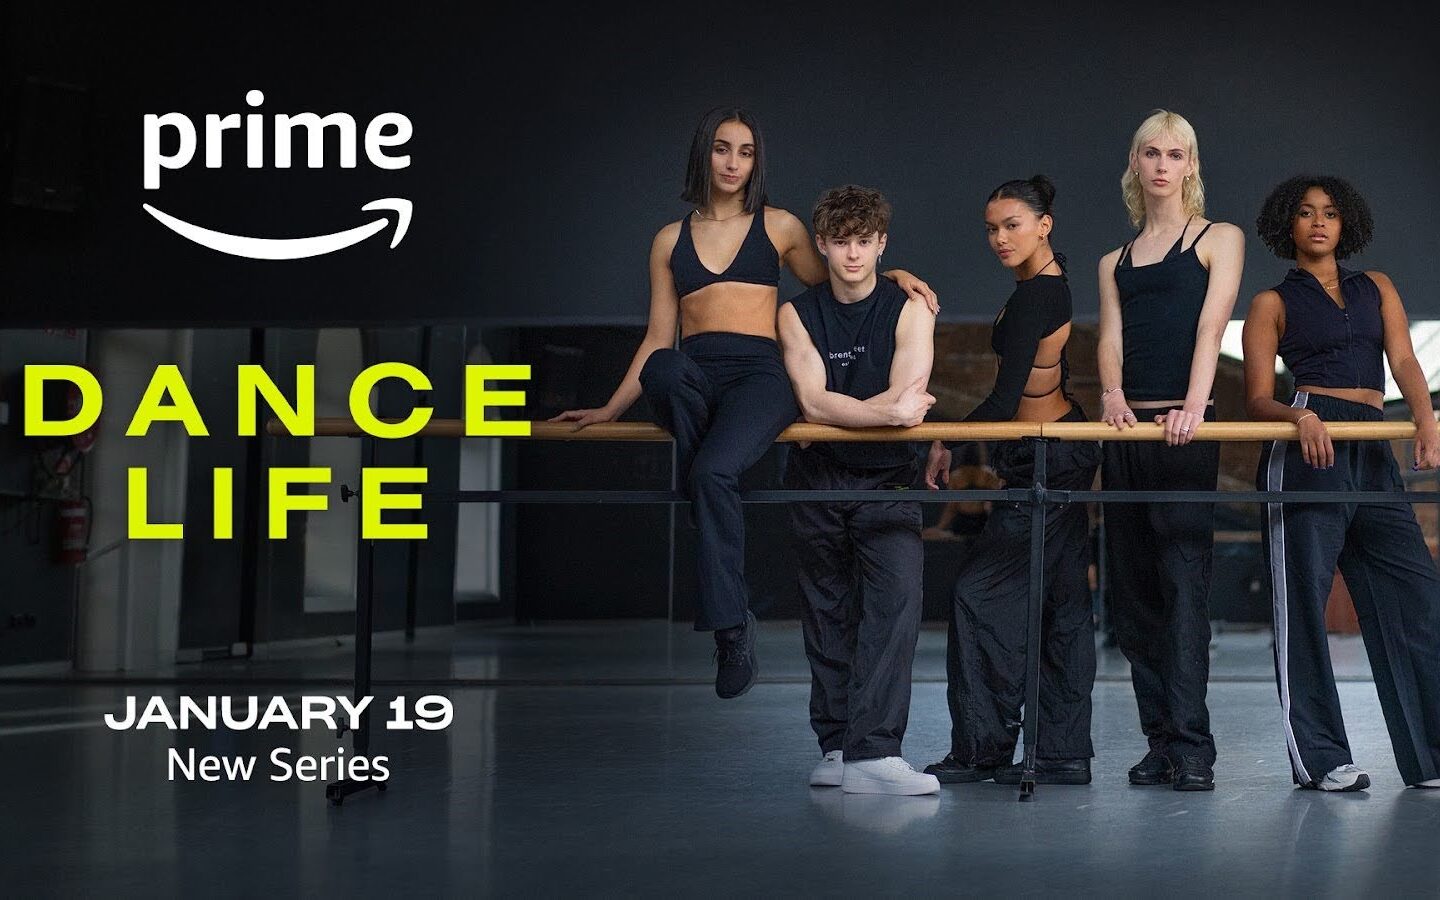 Prime Video Releases Trailer for Australian Original Docu-series "Dance Life"